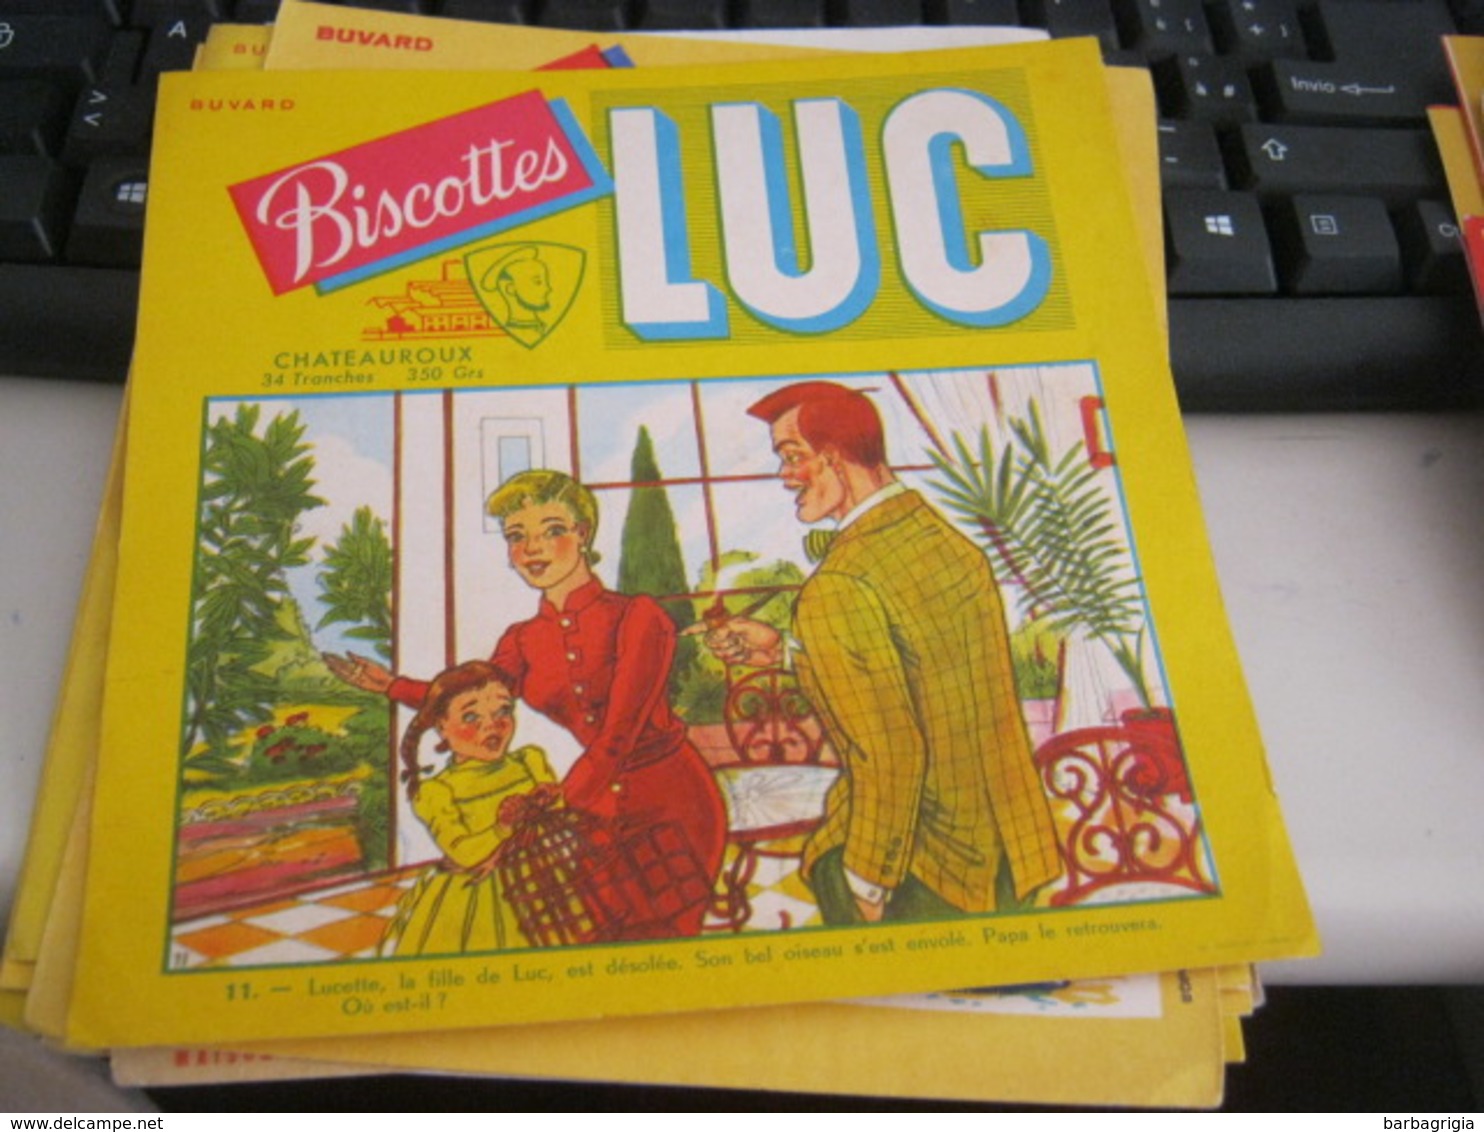 BUVARD PUBBLICITARIA BISCOTTES LUC N.11 - Biscottes